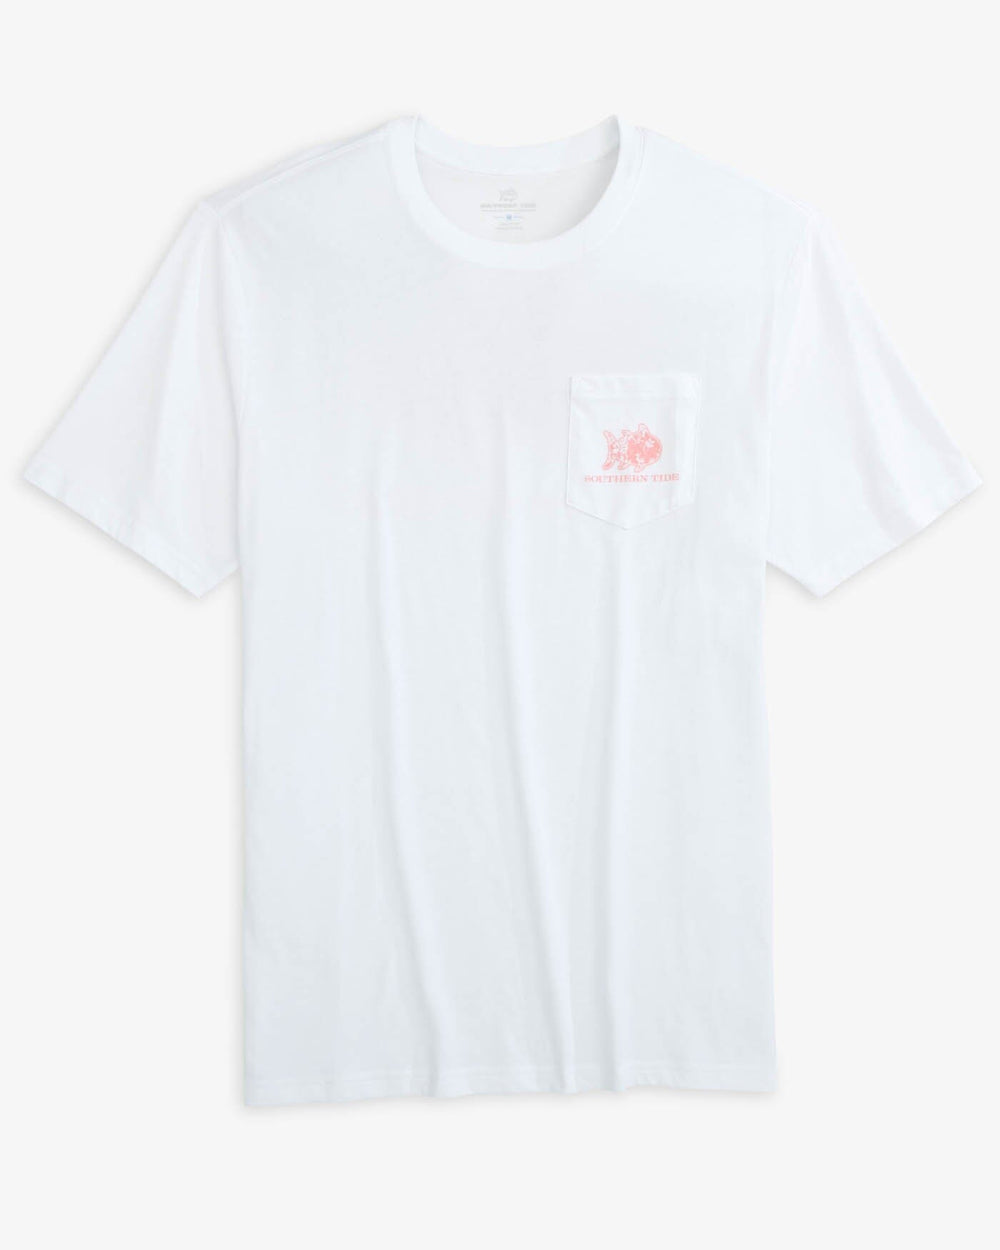 Plumeria Short Sleeve T-Shirt